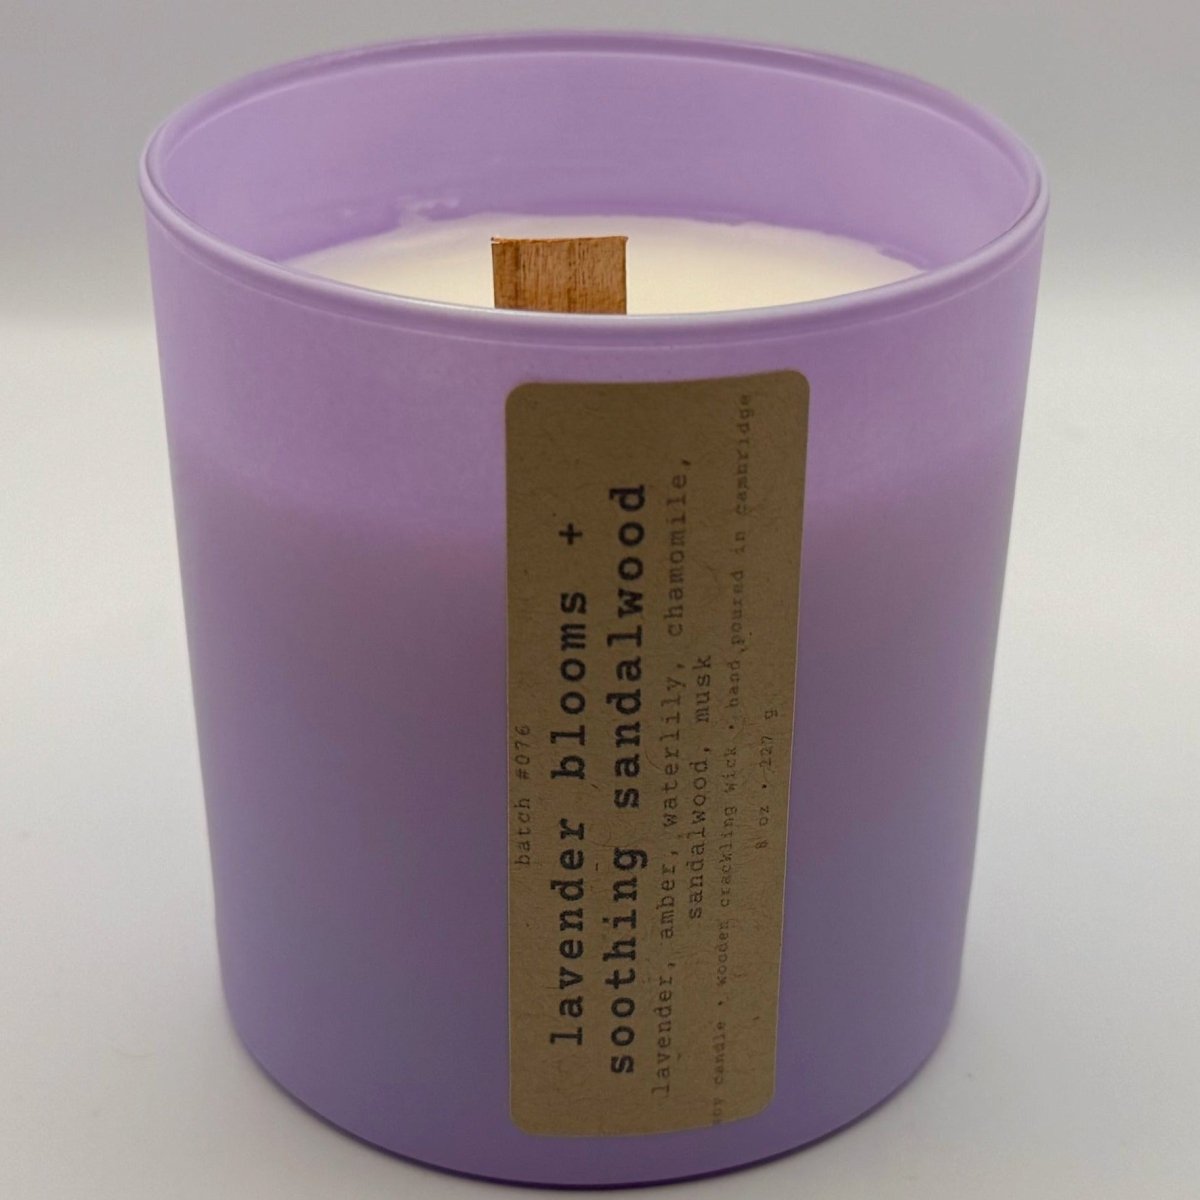 lavender blooms + soothing sandalwood candle - lavender blooms + soothing sandalwood candle - by kiele